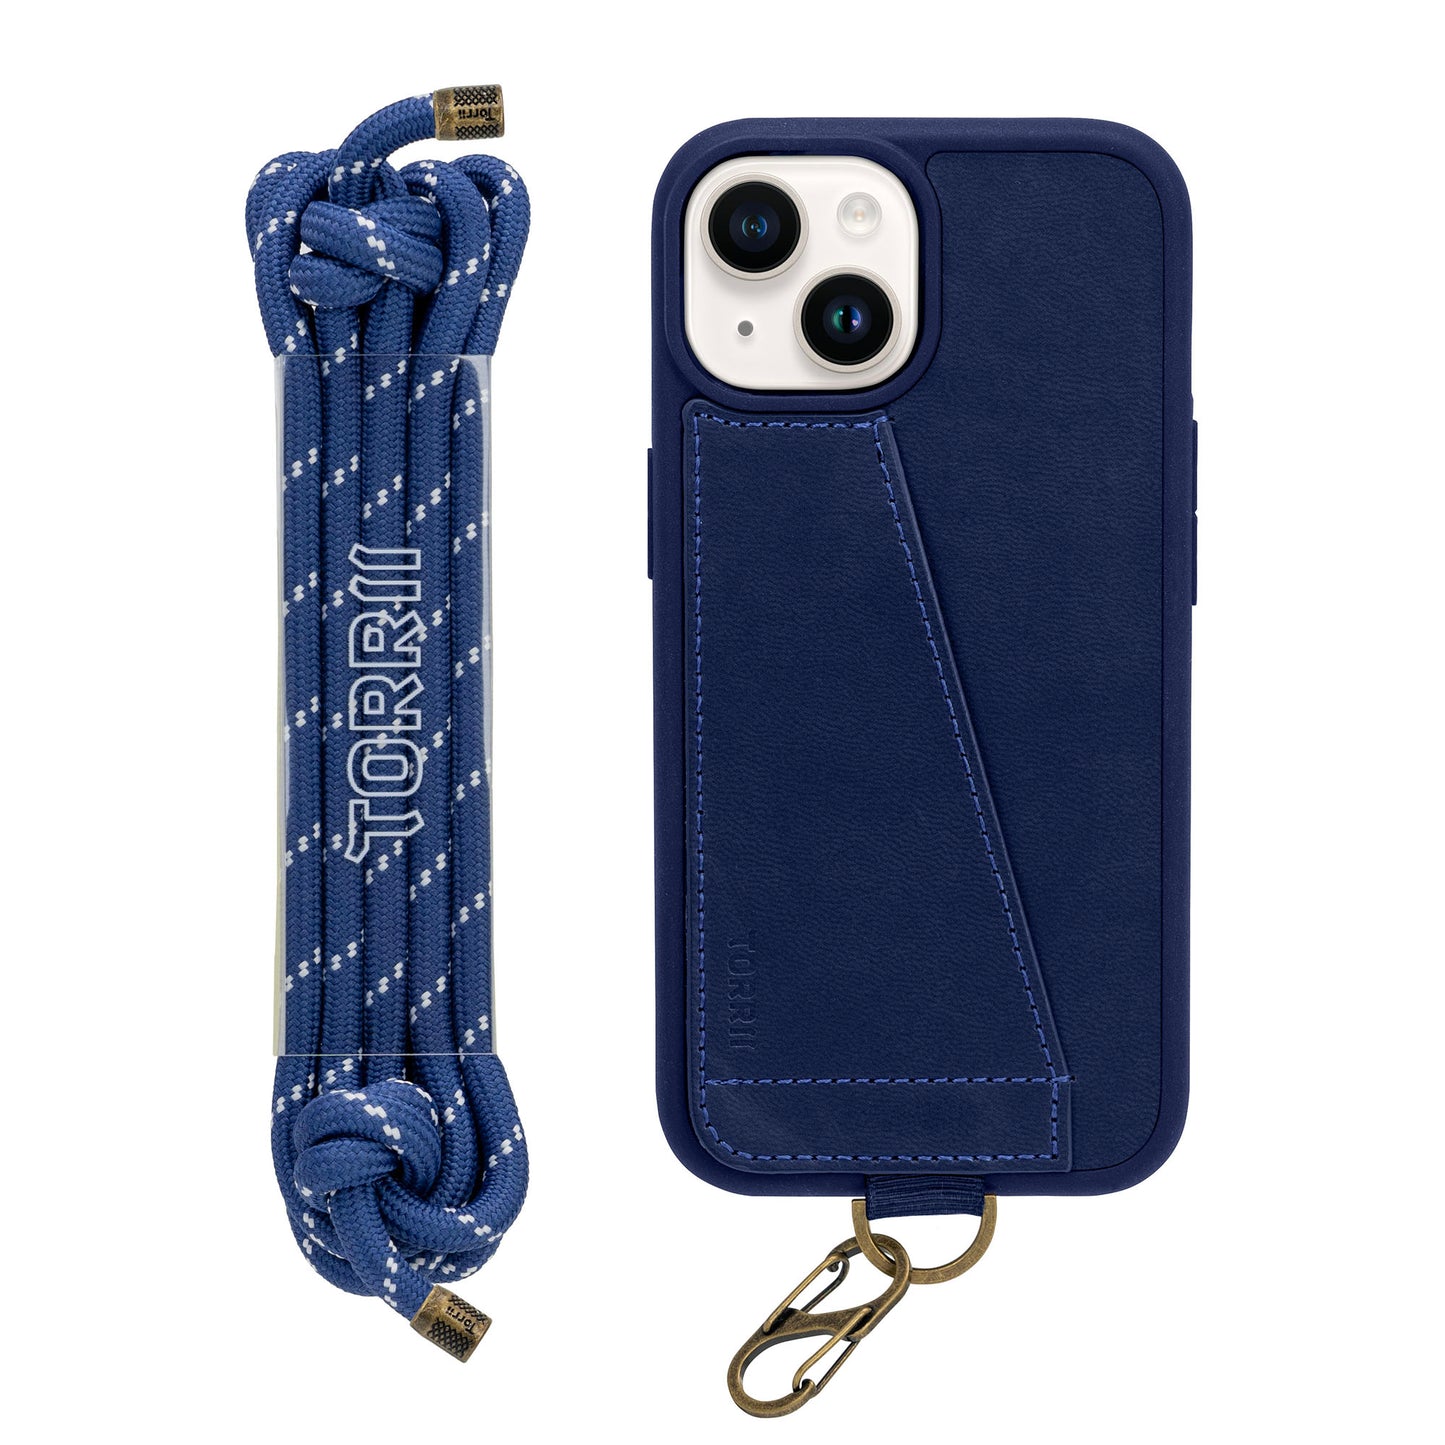 Torrii KOALA 皮革保護套 for iPhone 15 (深藍)